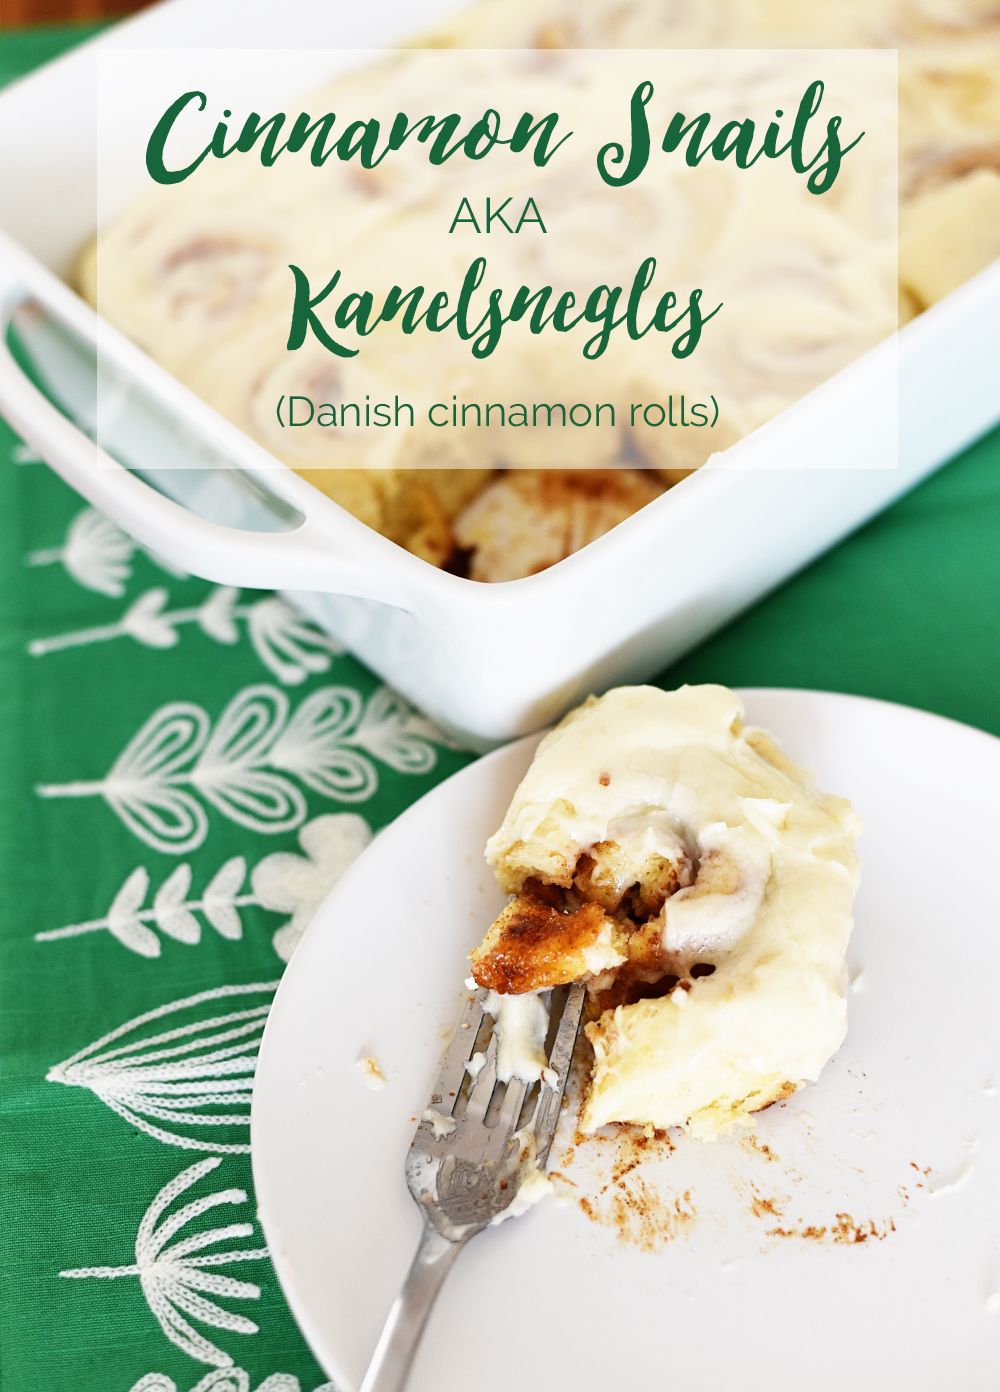 Cinnamon Snails (Kanelsnegles, aka Danish Cinnamon Rolls)